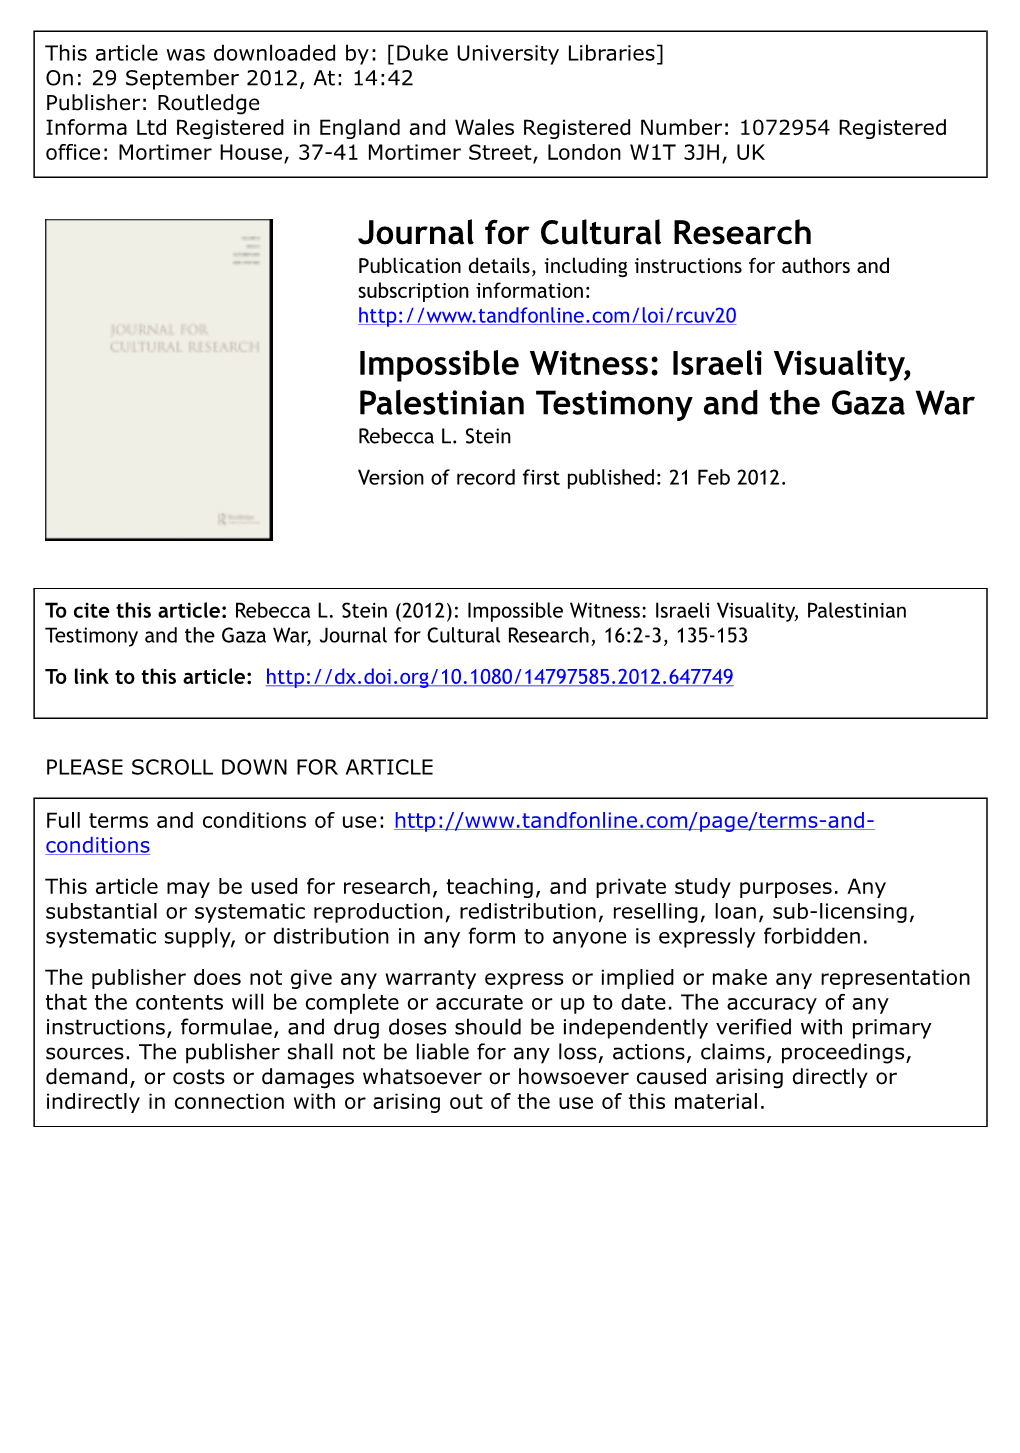 Israeli Visuality, Palestinian Testimony and the Gaza War Rebecca L